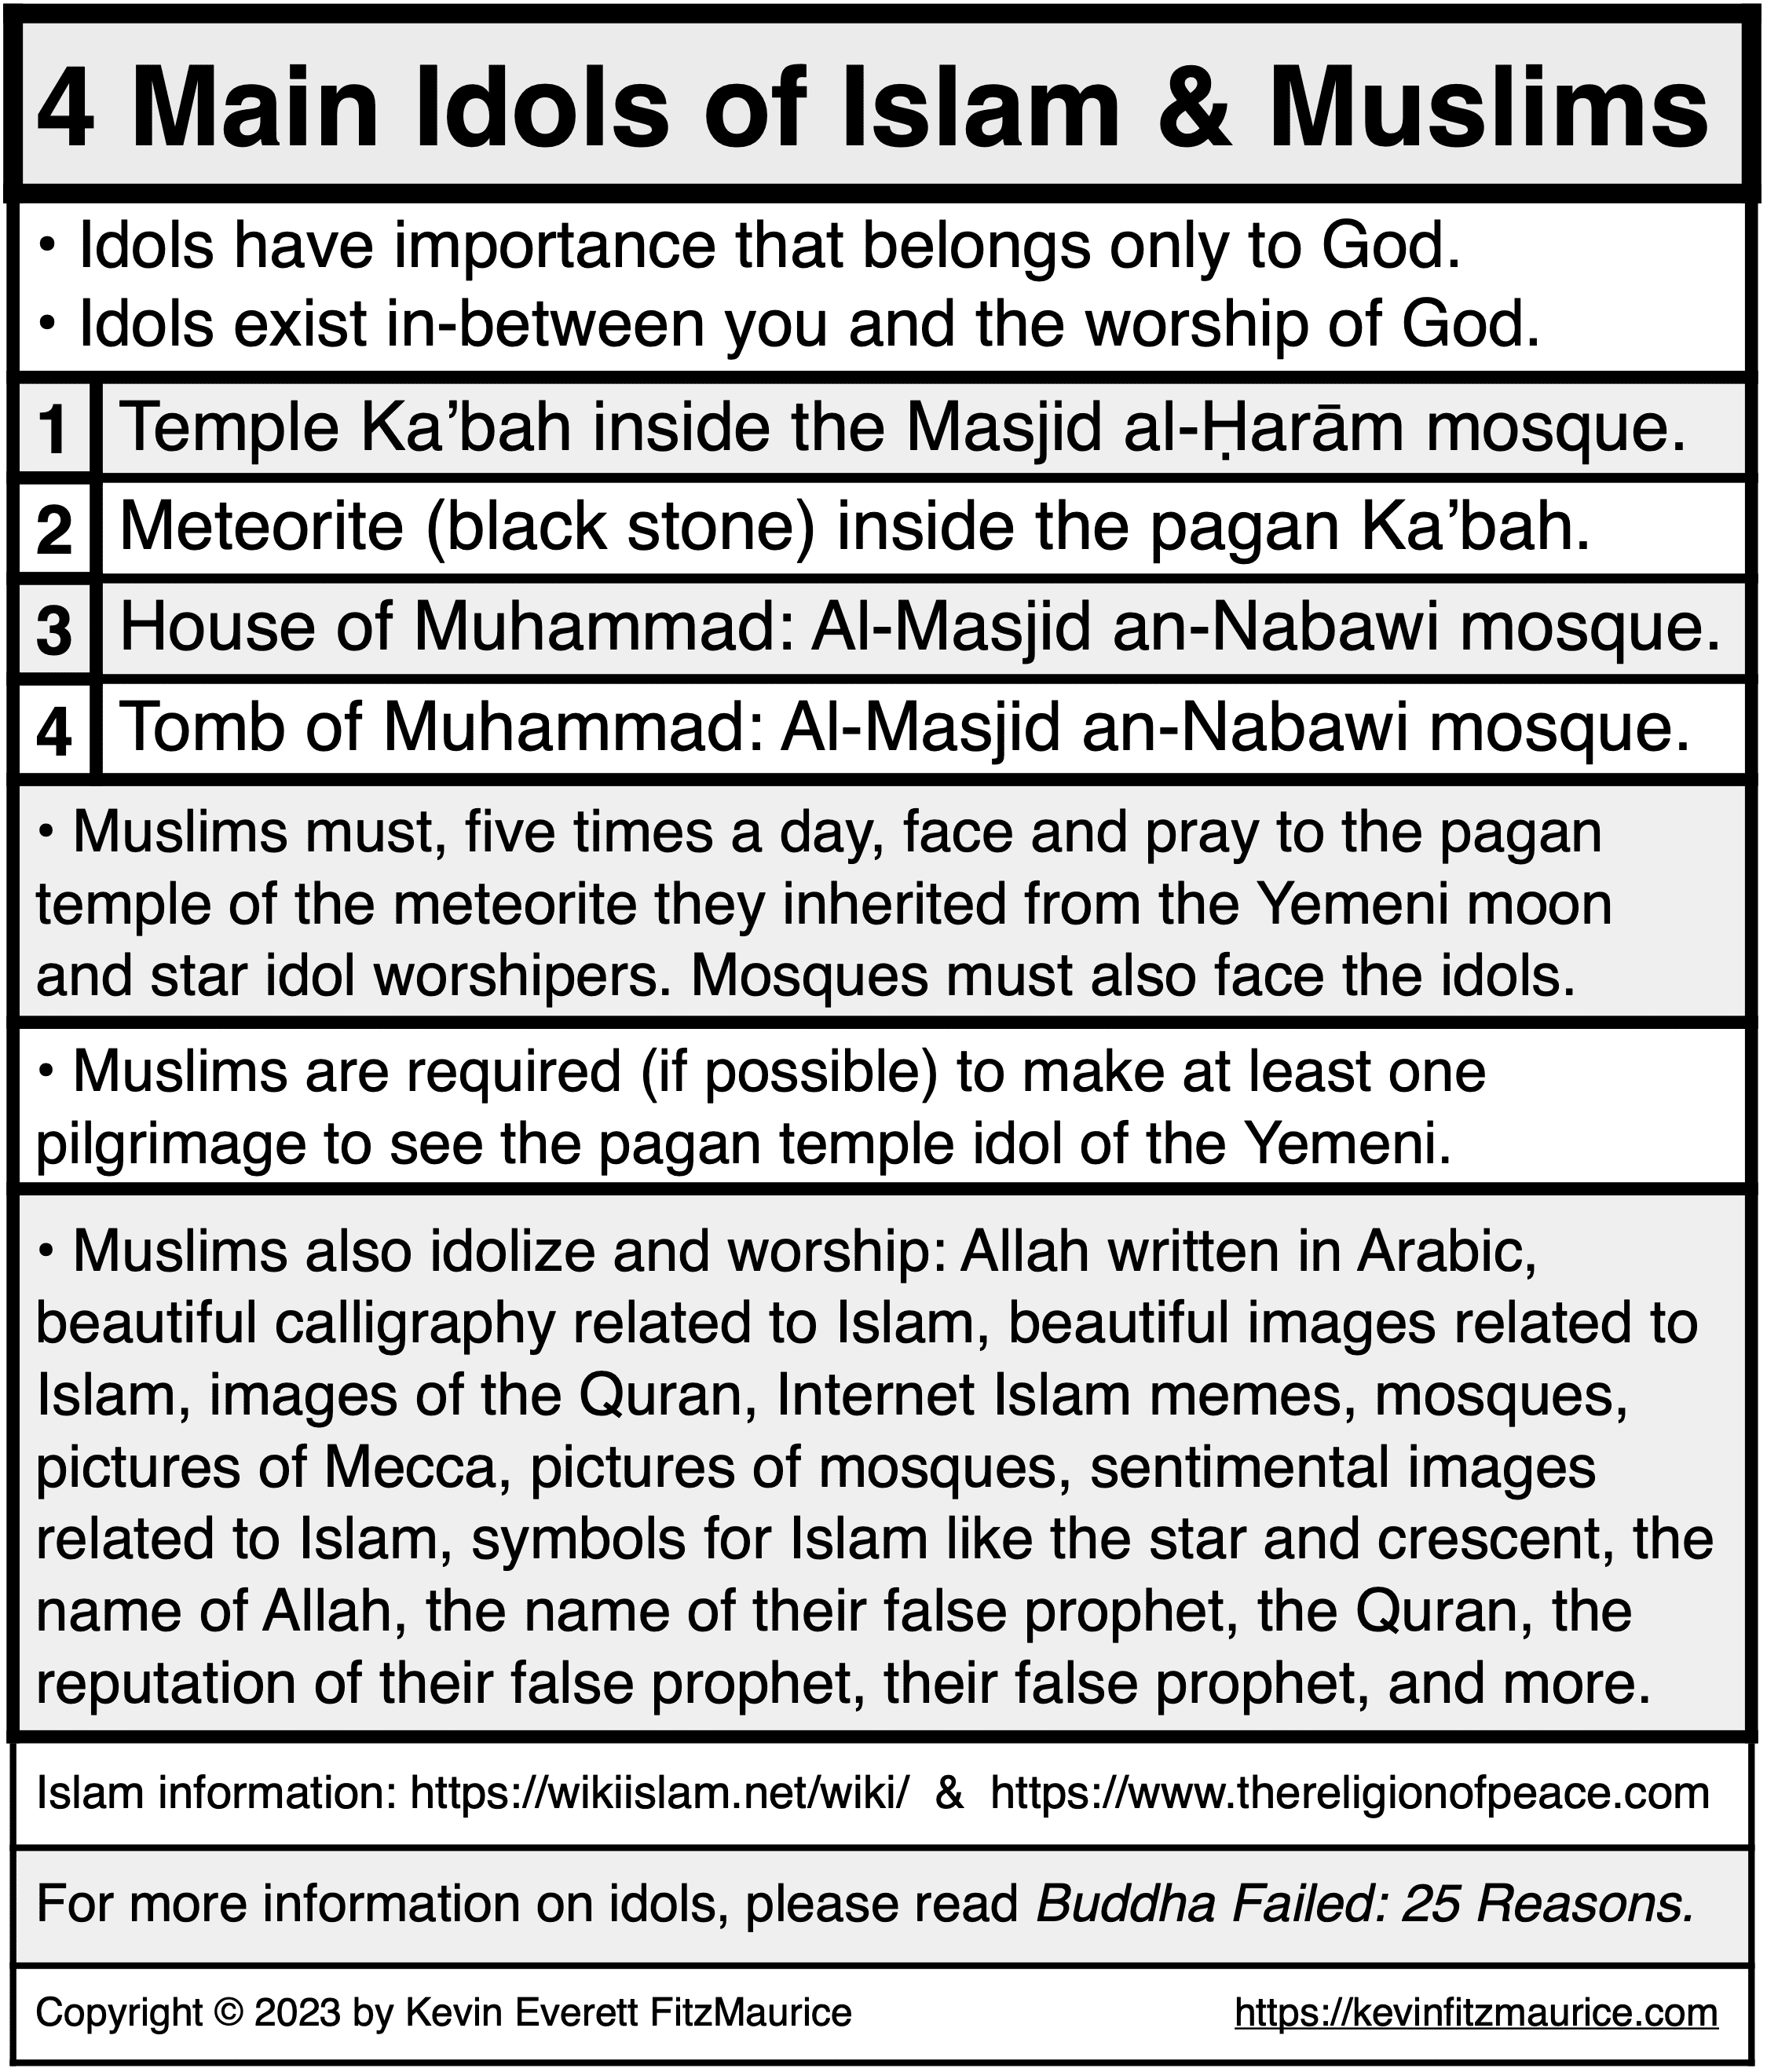 The 4 Main Idols of Islam